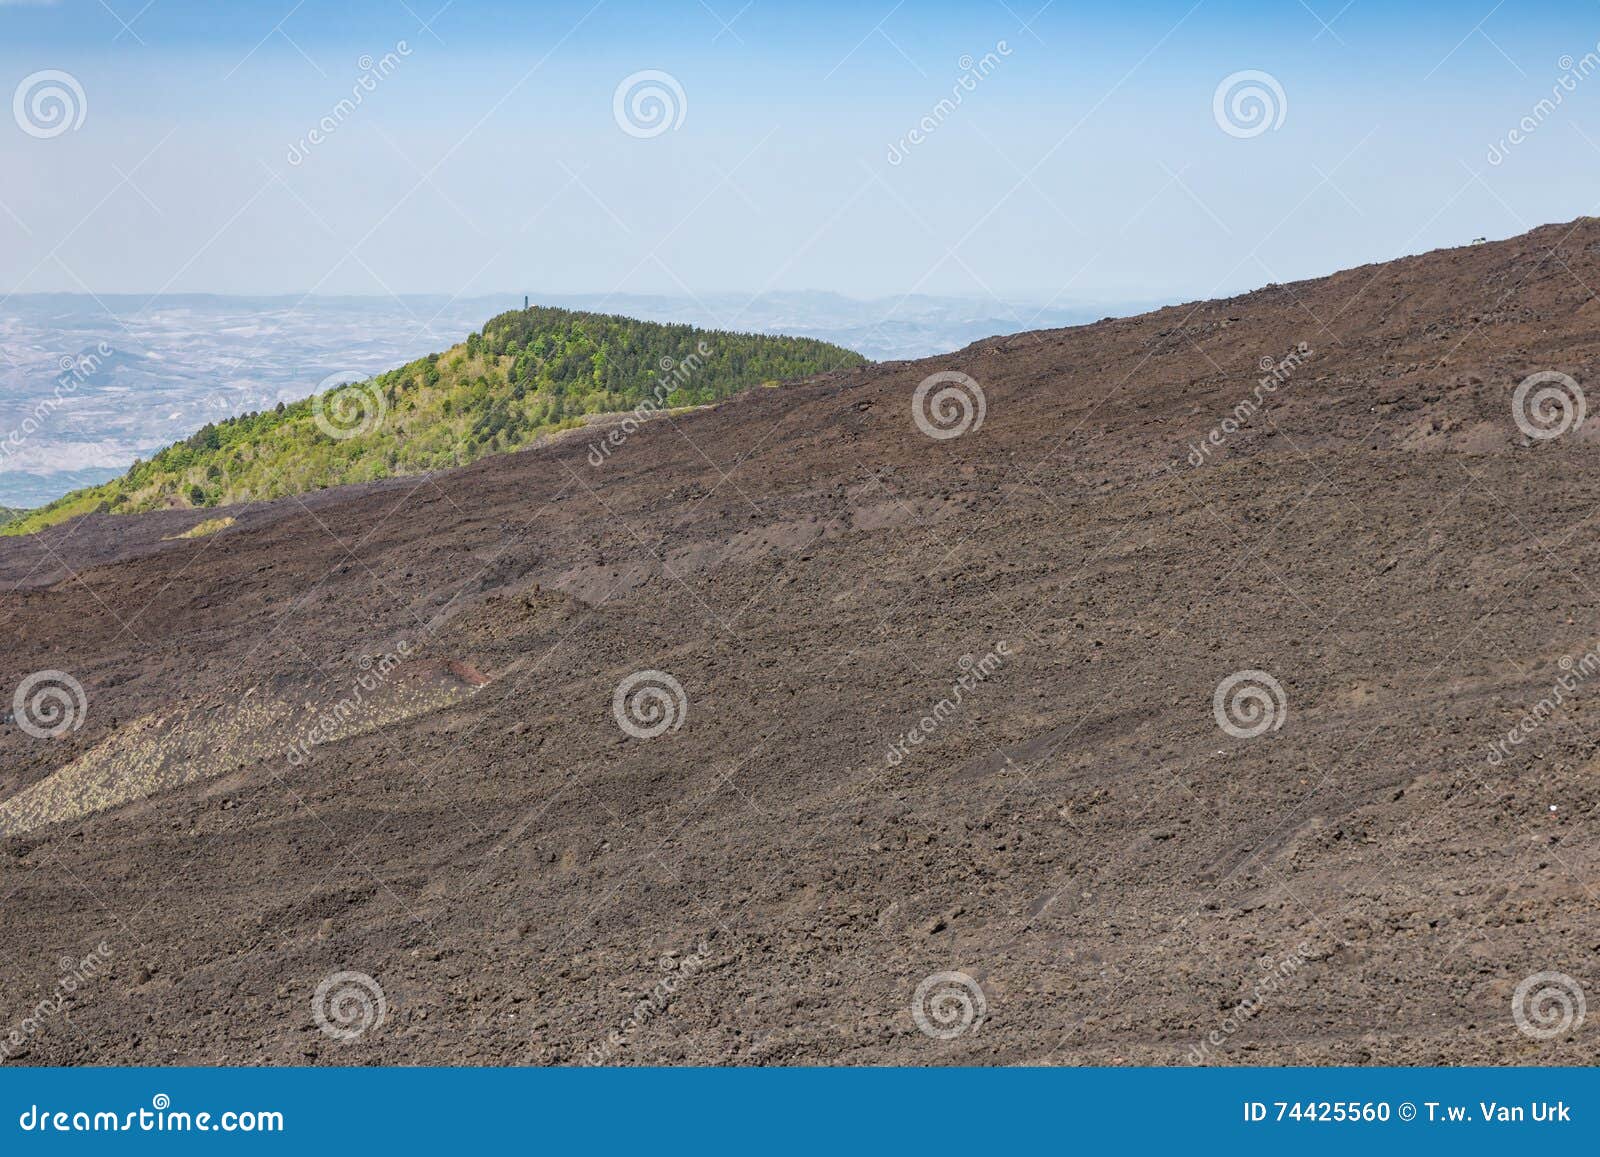 bare-slope-mount-etna-covered-ashes-stones-sicily-italy-74425560.jpg